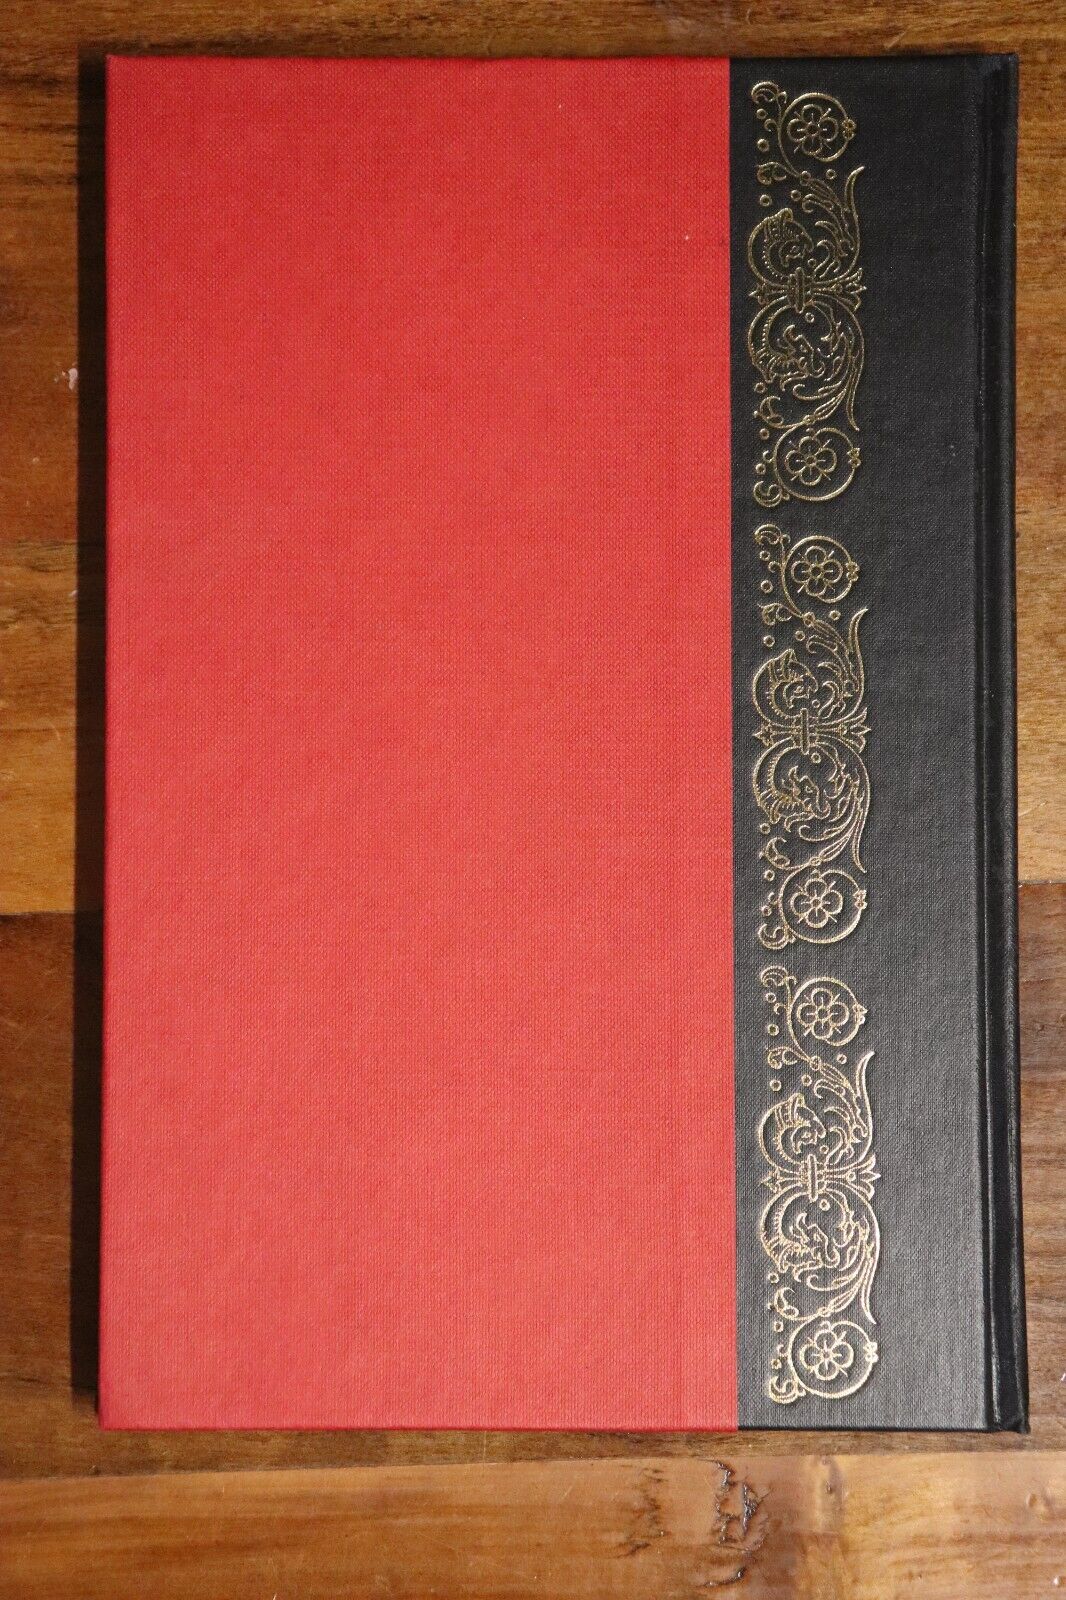 A Man Of Singular Virtue: Sir Thomas More - 1980 - Folio Society History Book